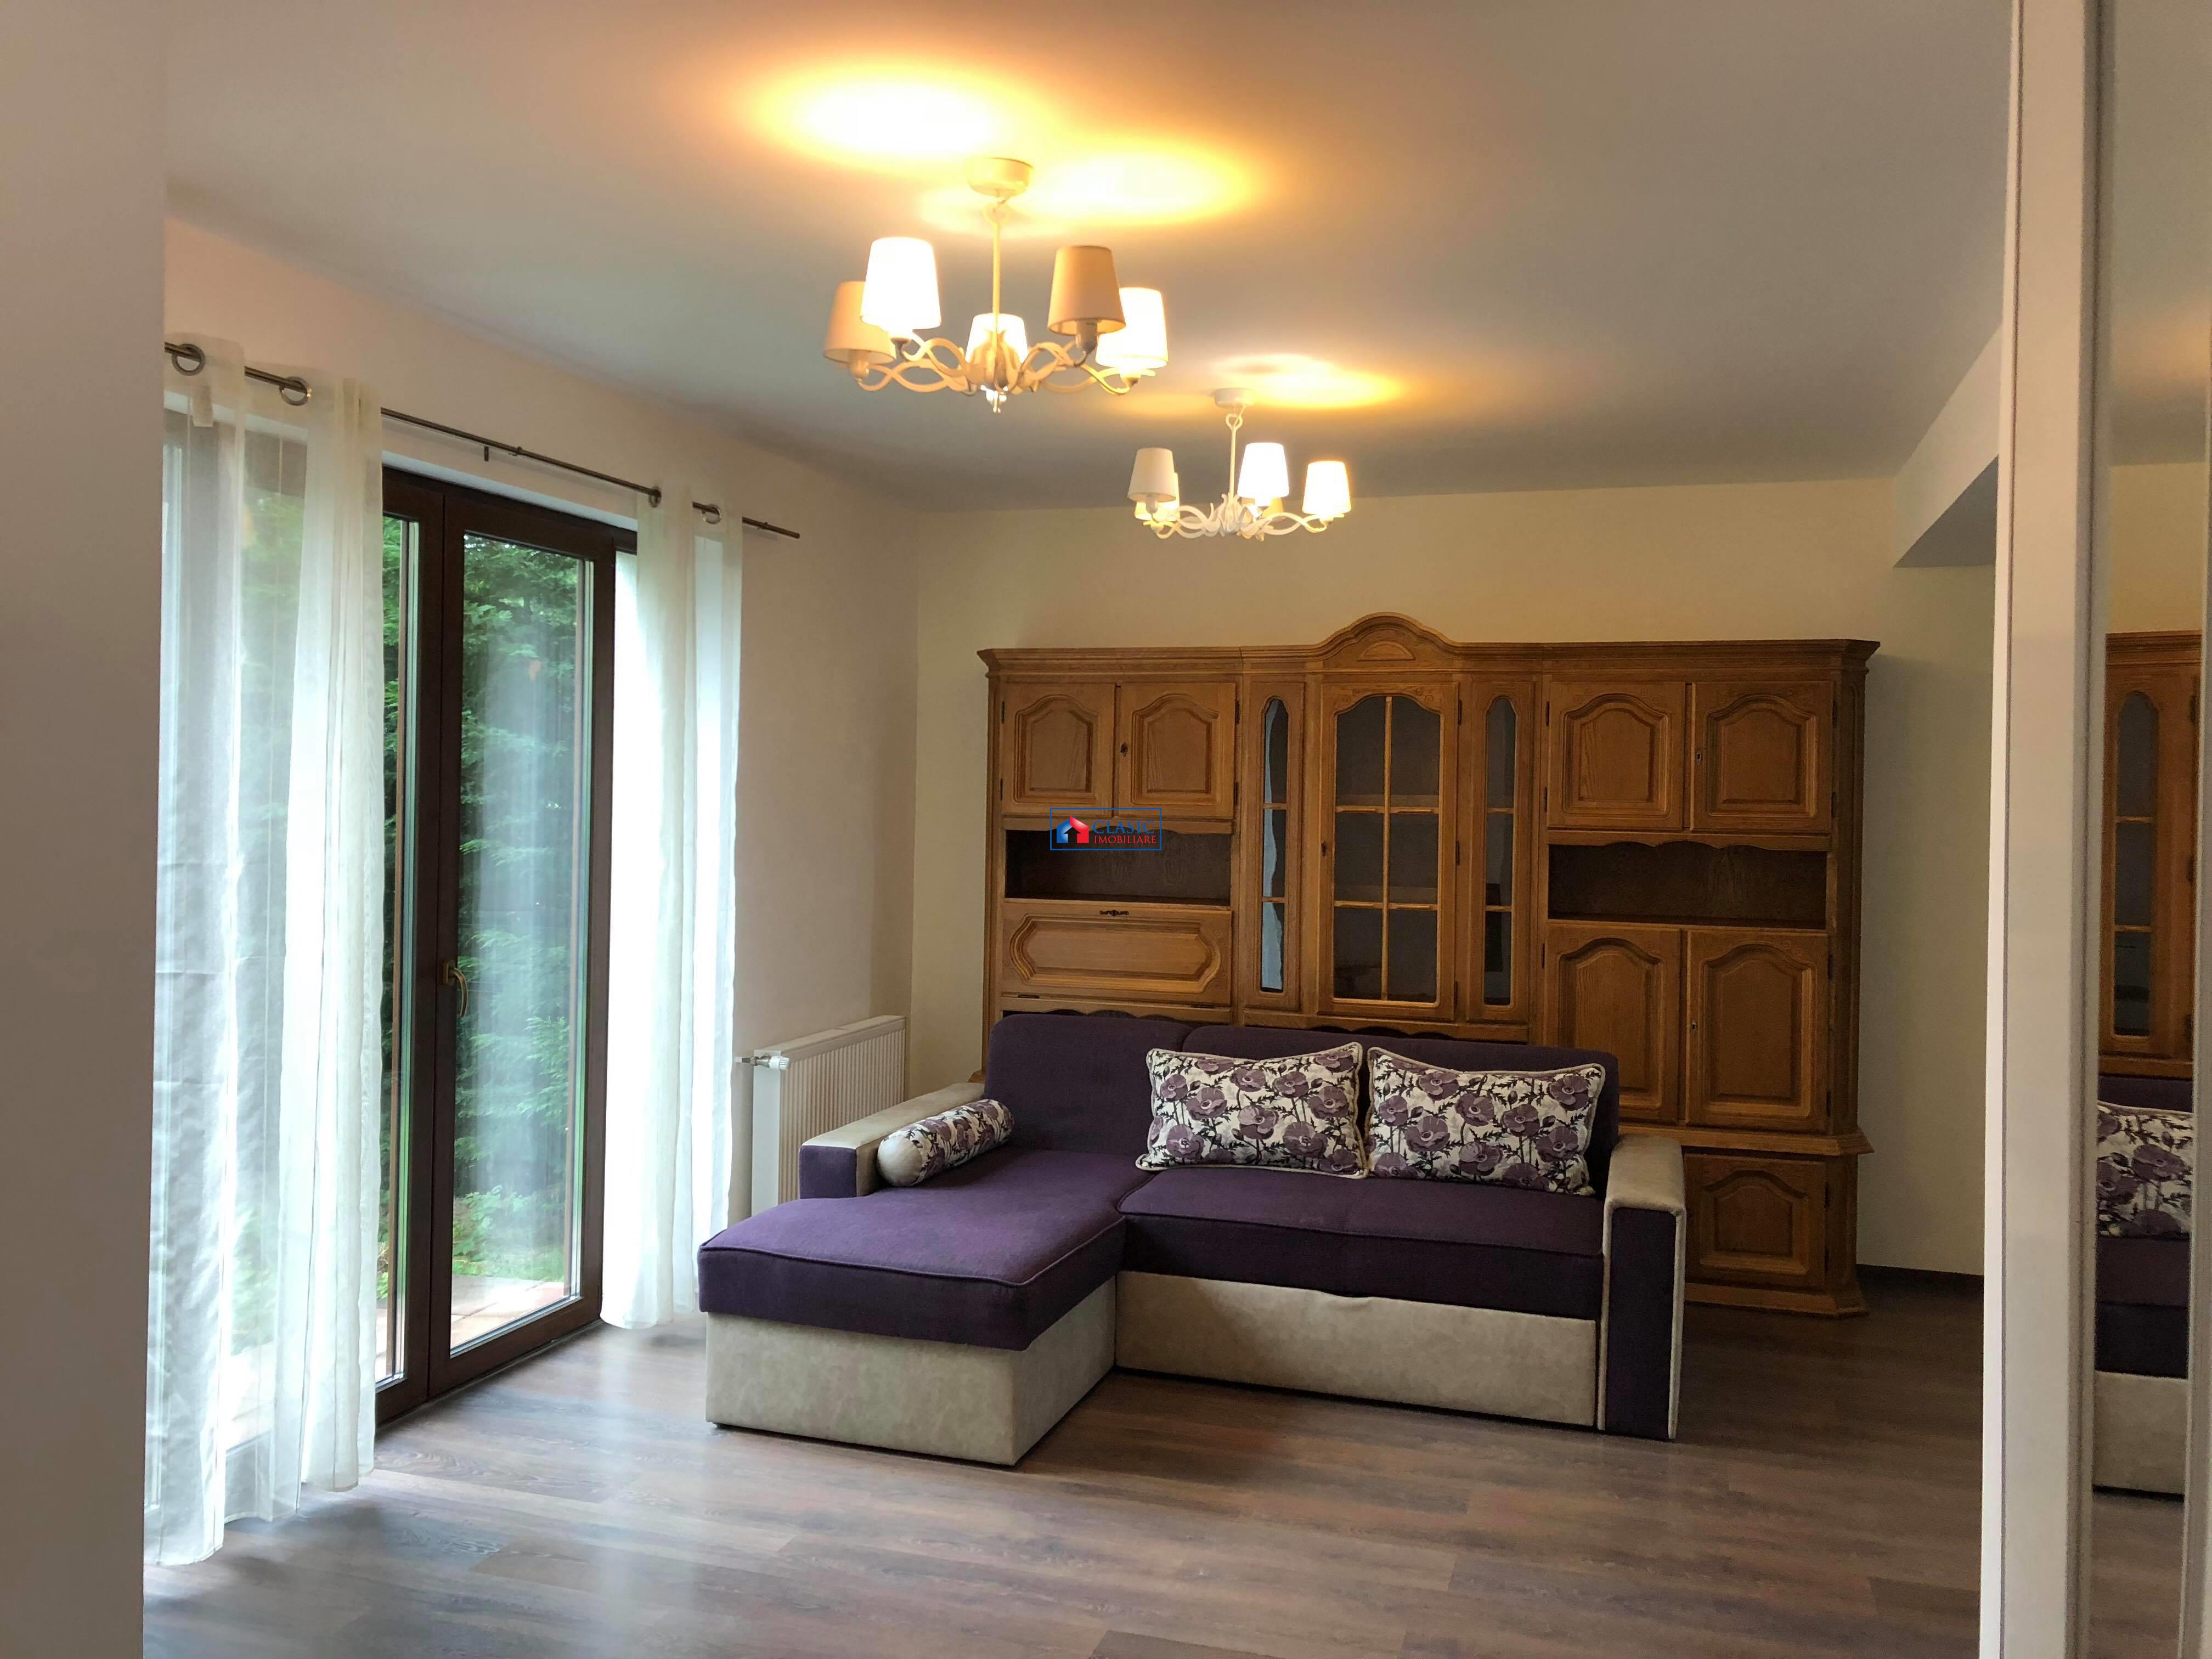 Inchiriere casa triplex 5 camere moderna zona Buna Ziua Hotel Athos